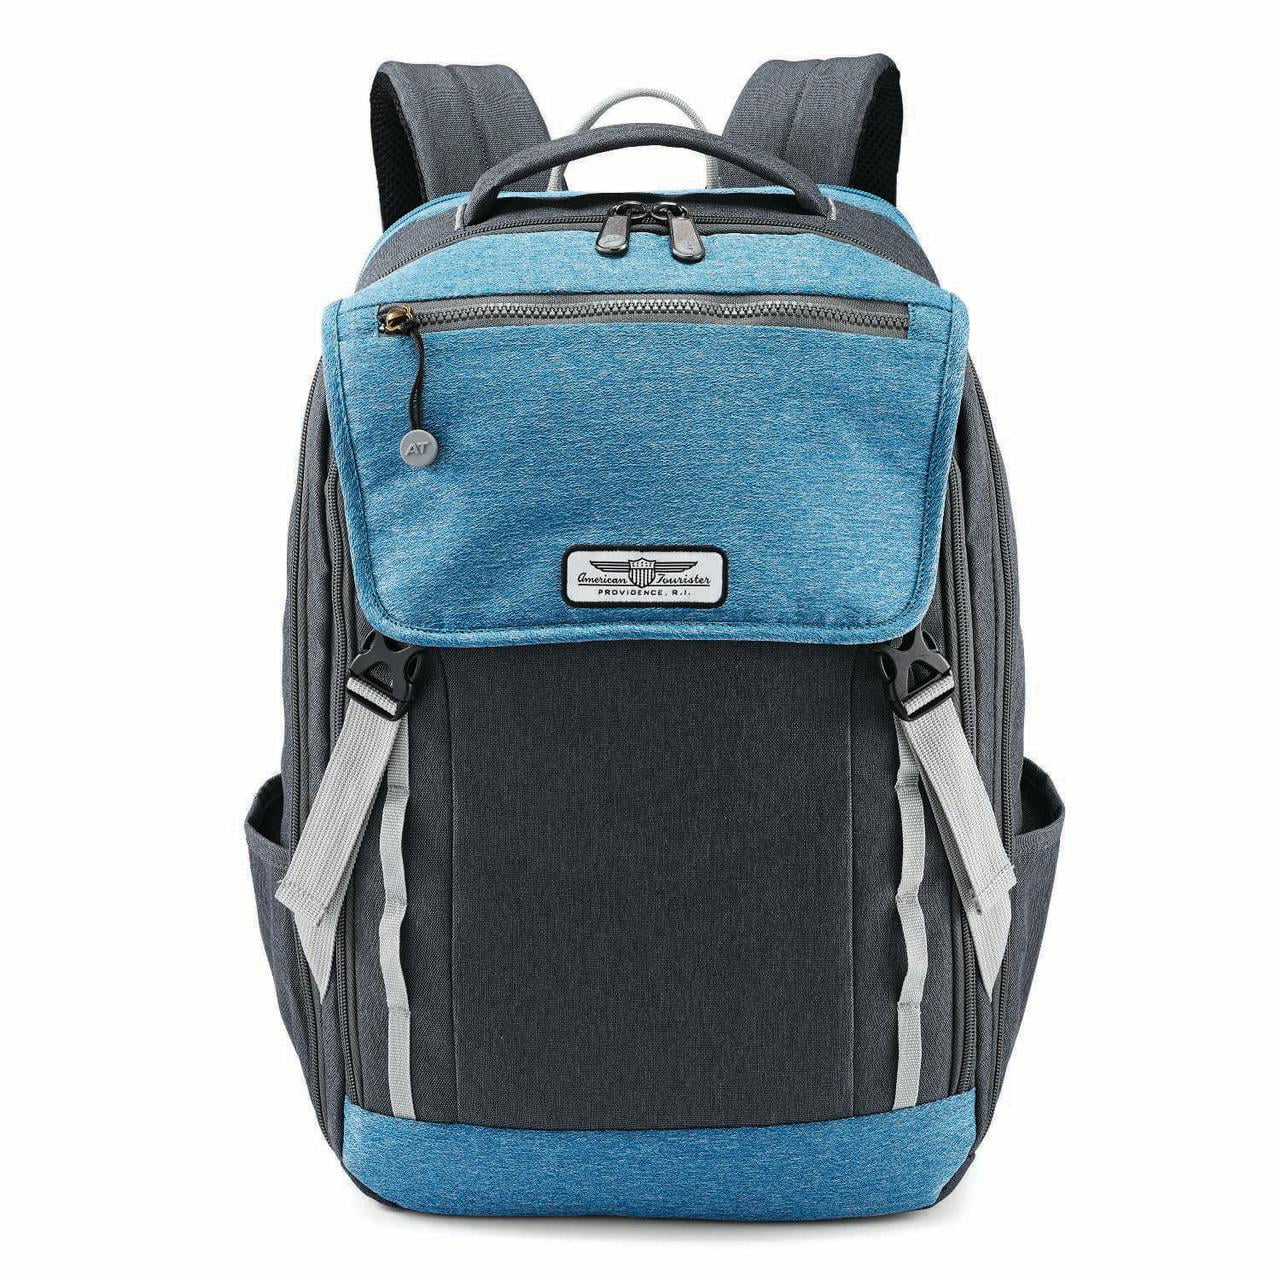 American Tourister Dig Dug Backpack (Grey/Navy) - Walmart.com